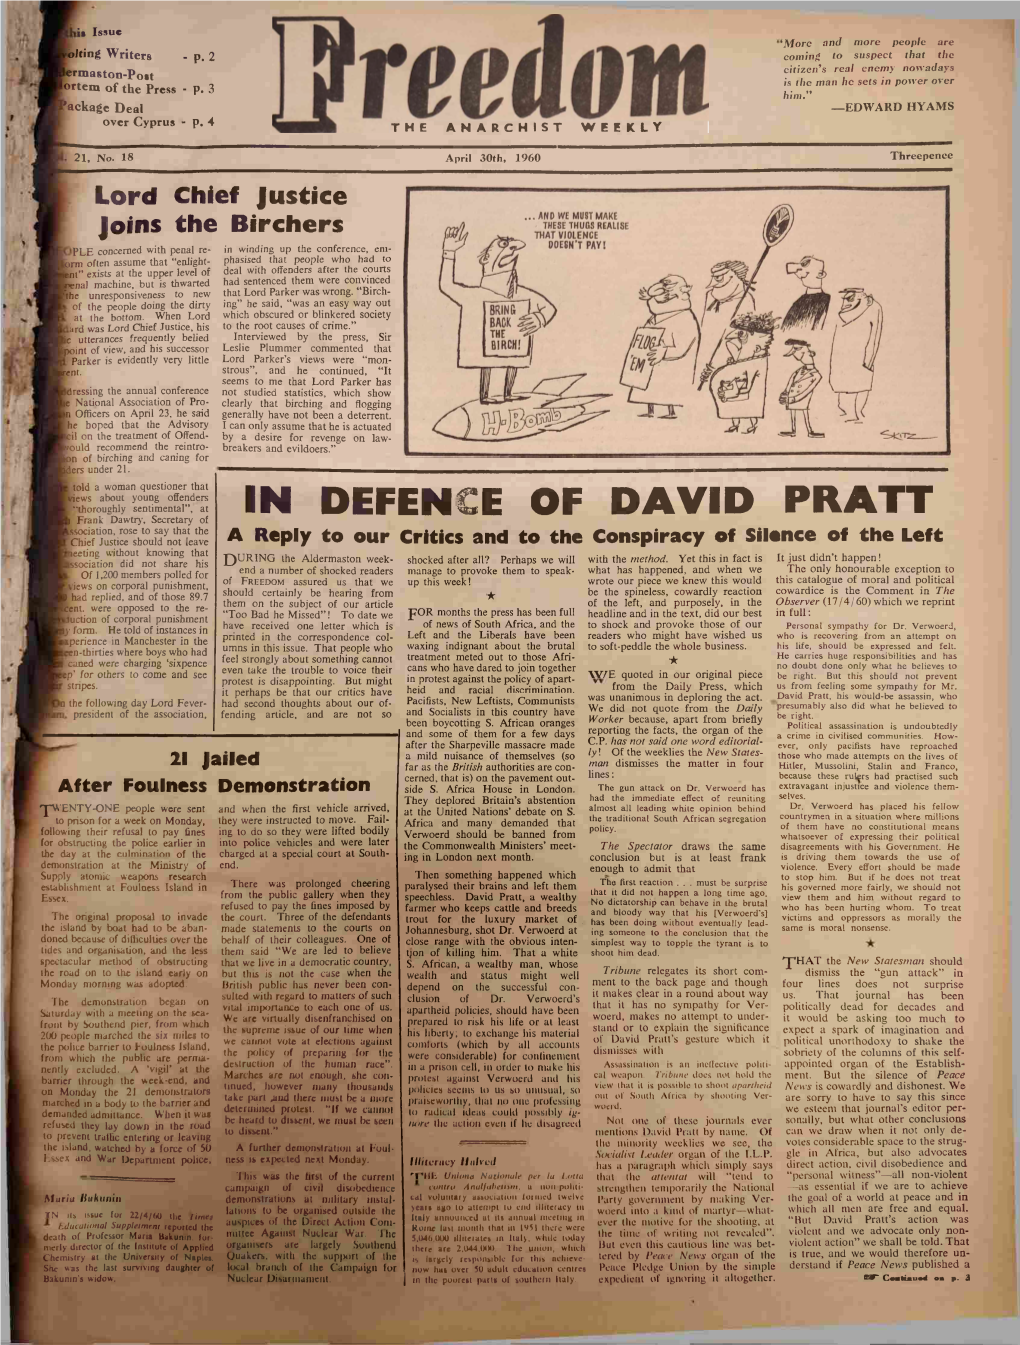 In Defence of David Pratt